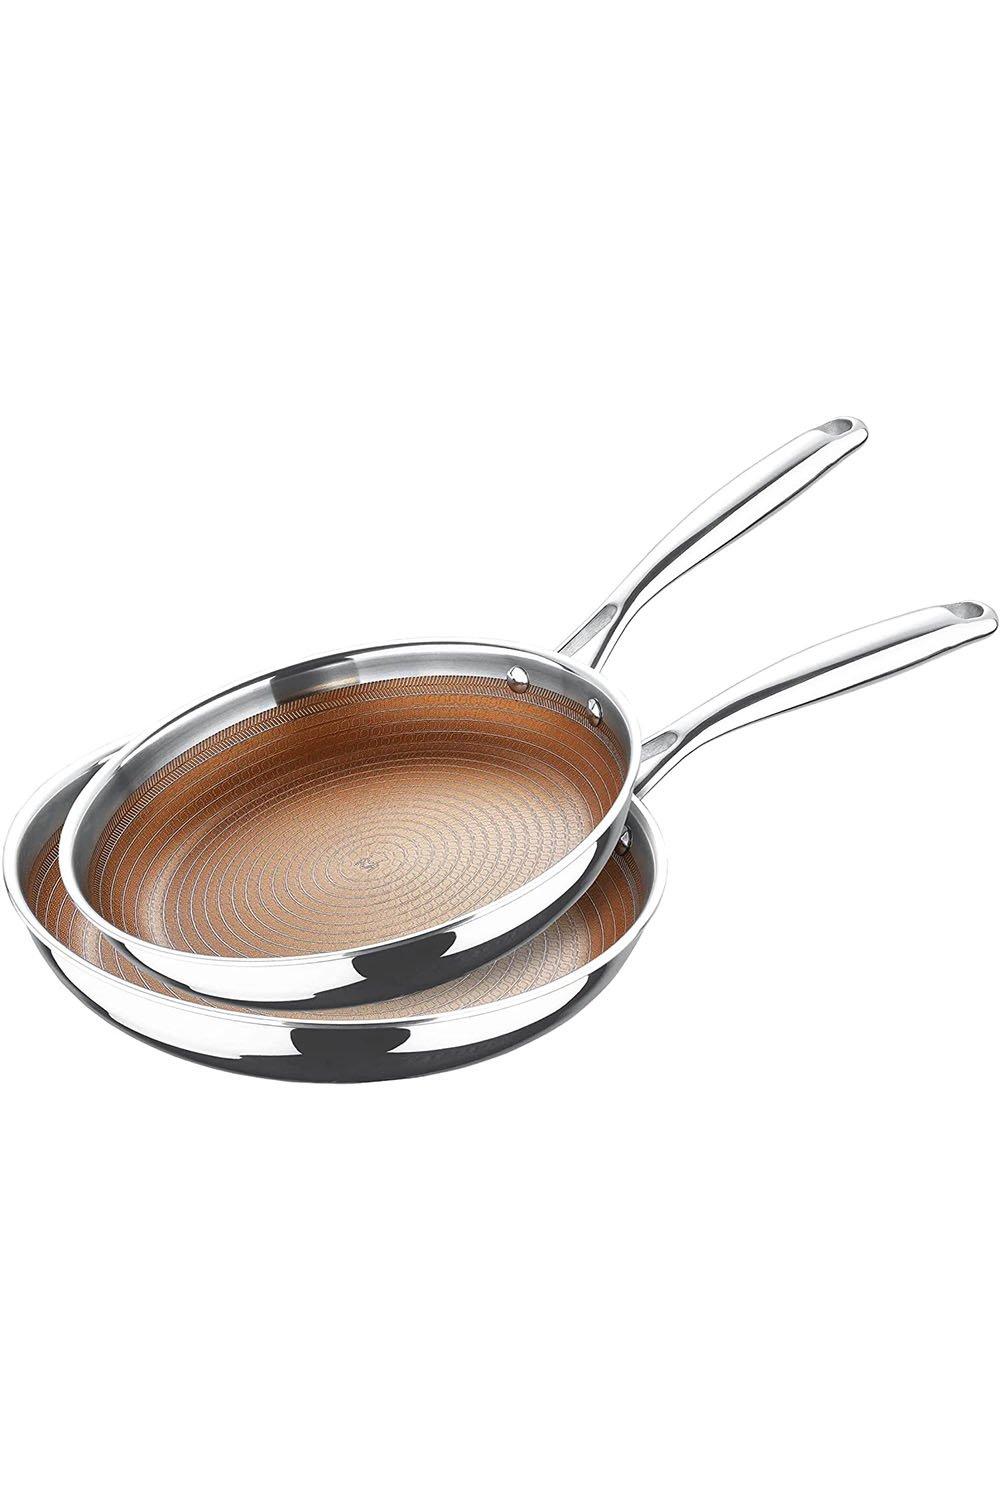 giro set of 2 stainless steel non-stick frying pan 20cm/26cm silver/bronze